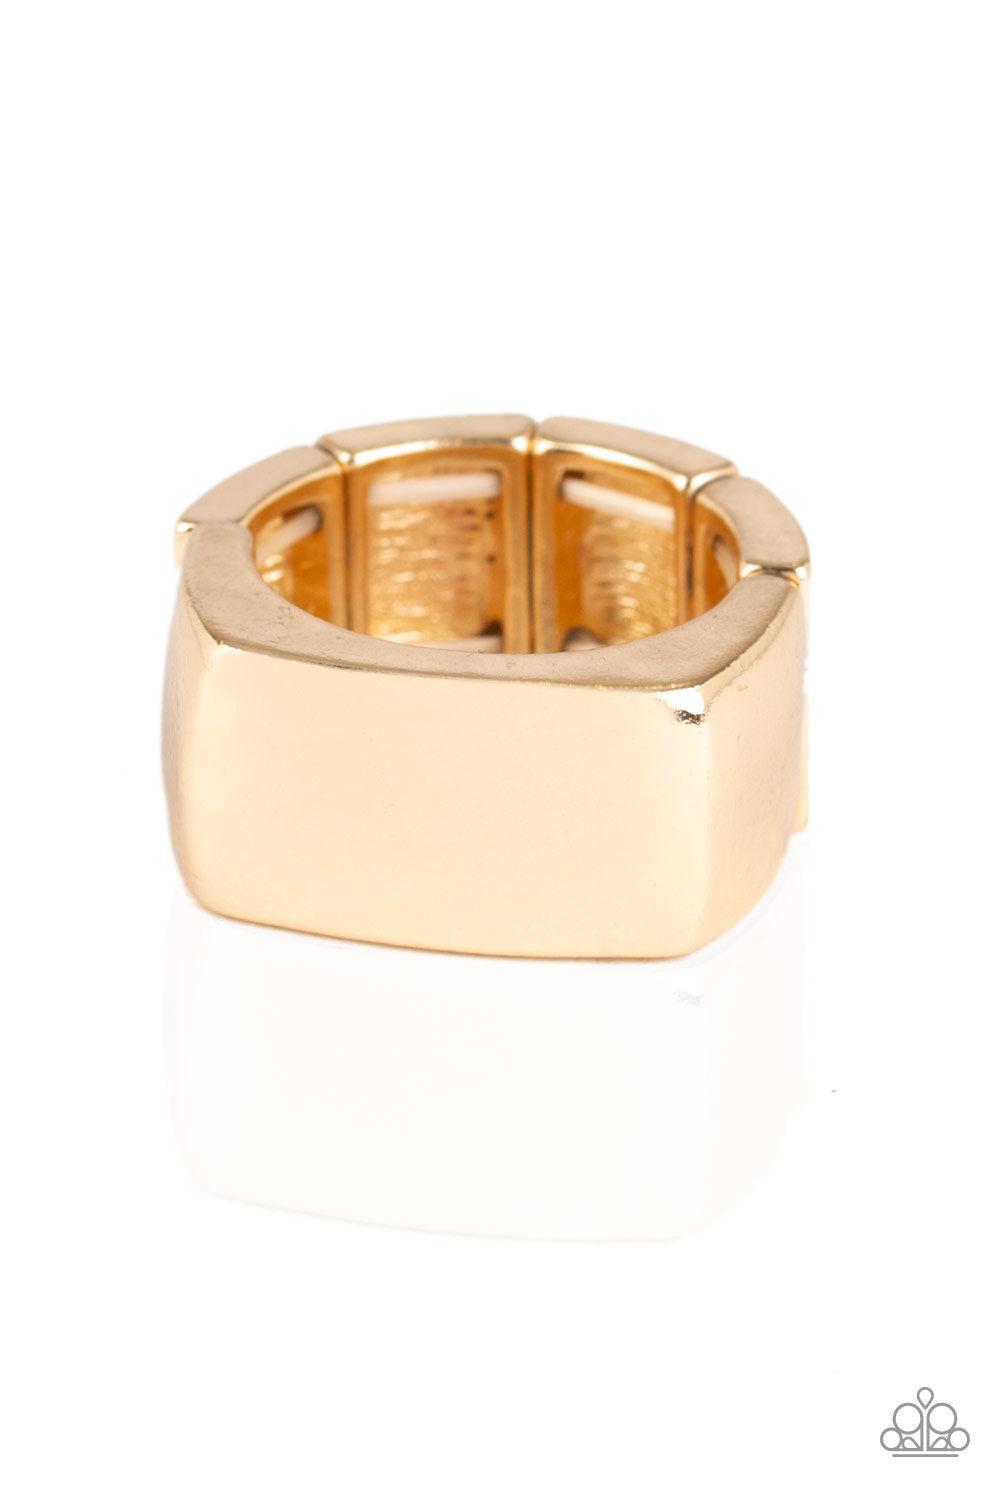 Straightforward Men's Gold Ring - Paparazzi Accessories- lightbox - CarasShop.com - $5 Jewelry by Cara Jewels